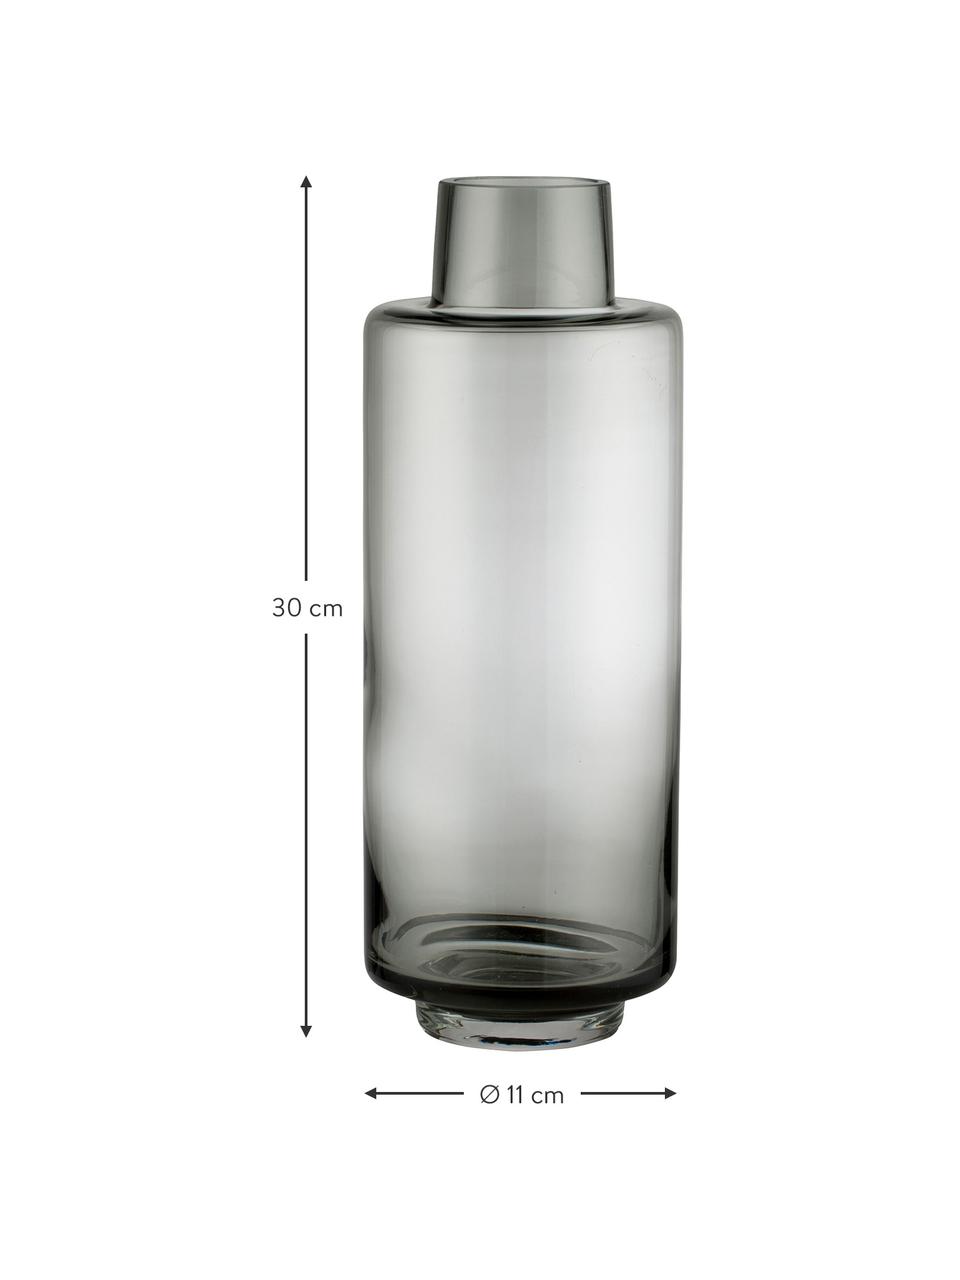 Grosse Mundgeblasene Vase Hedria in Grau, Glas, Rauchgrau, Ø 11 x H 30 cm